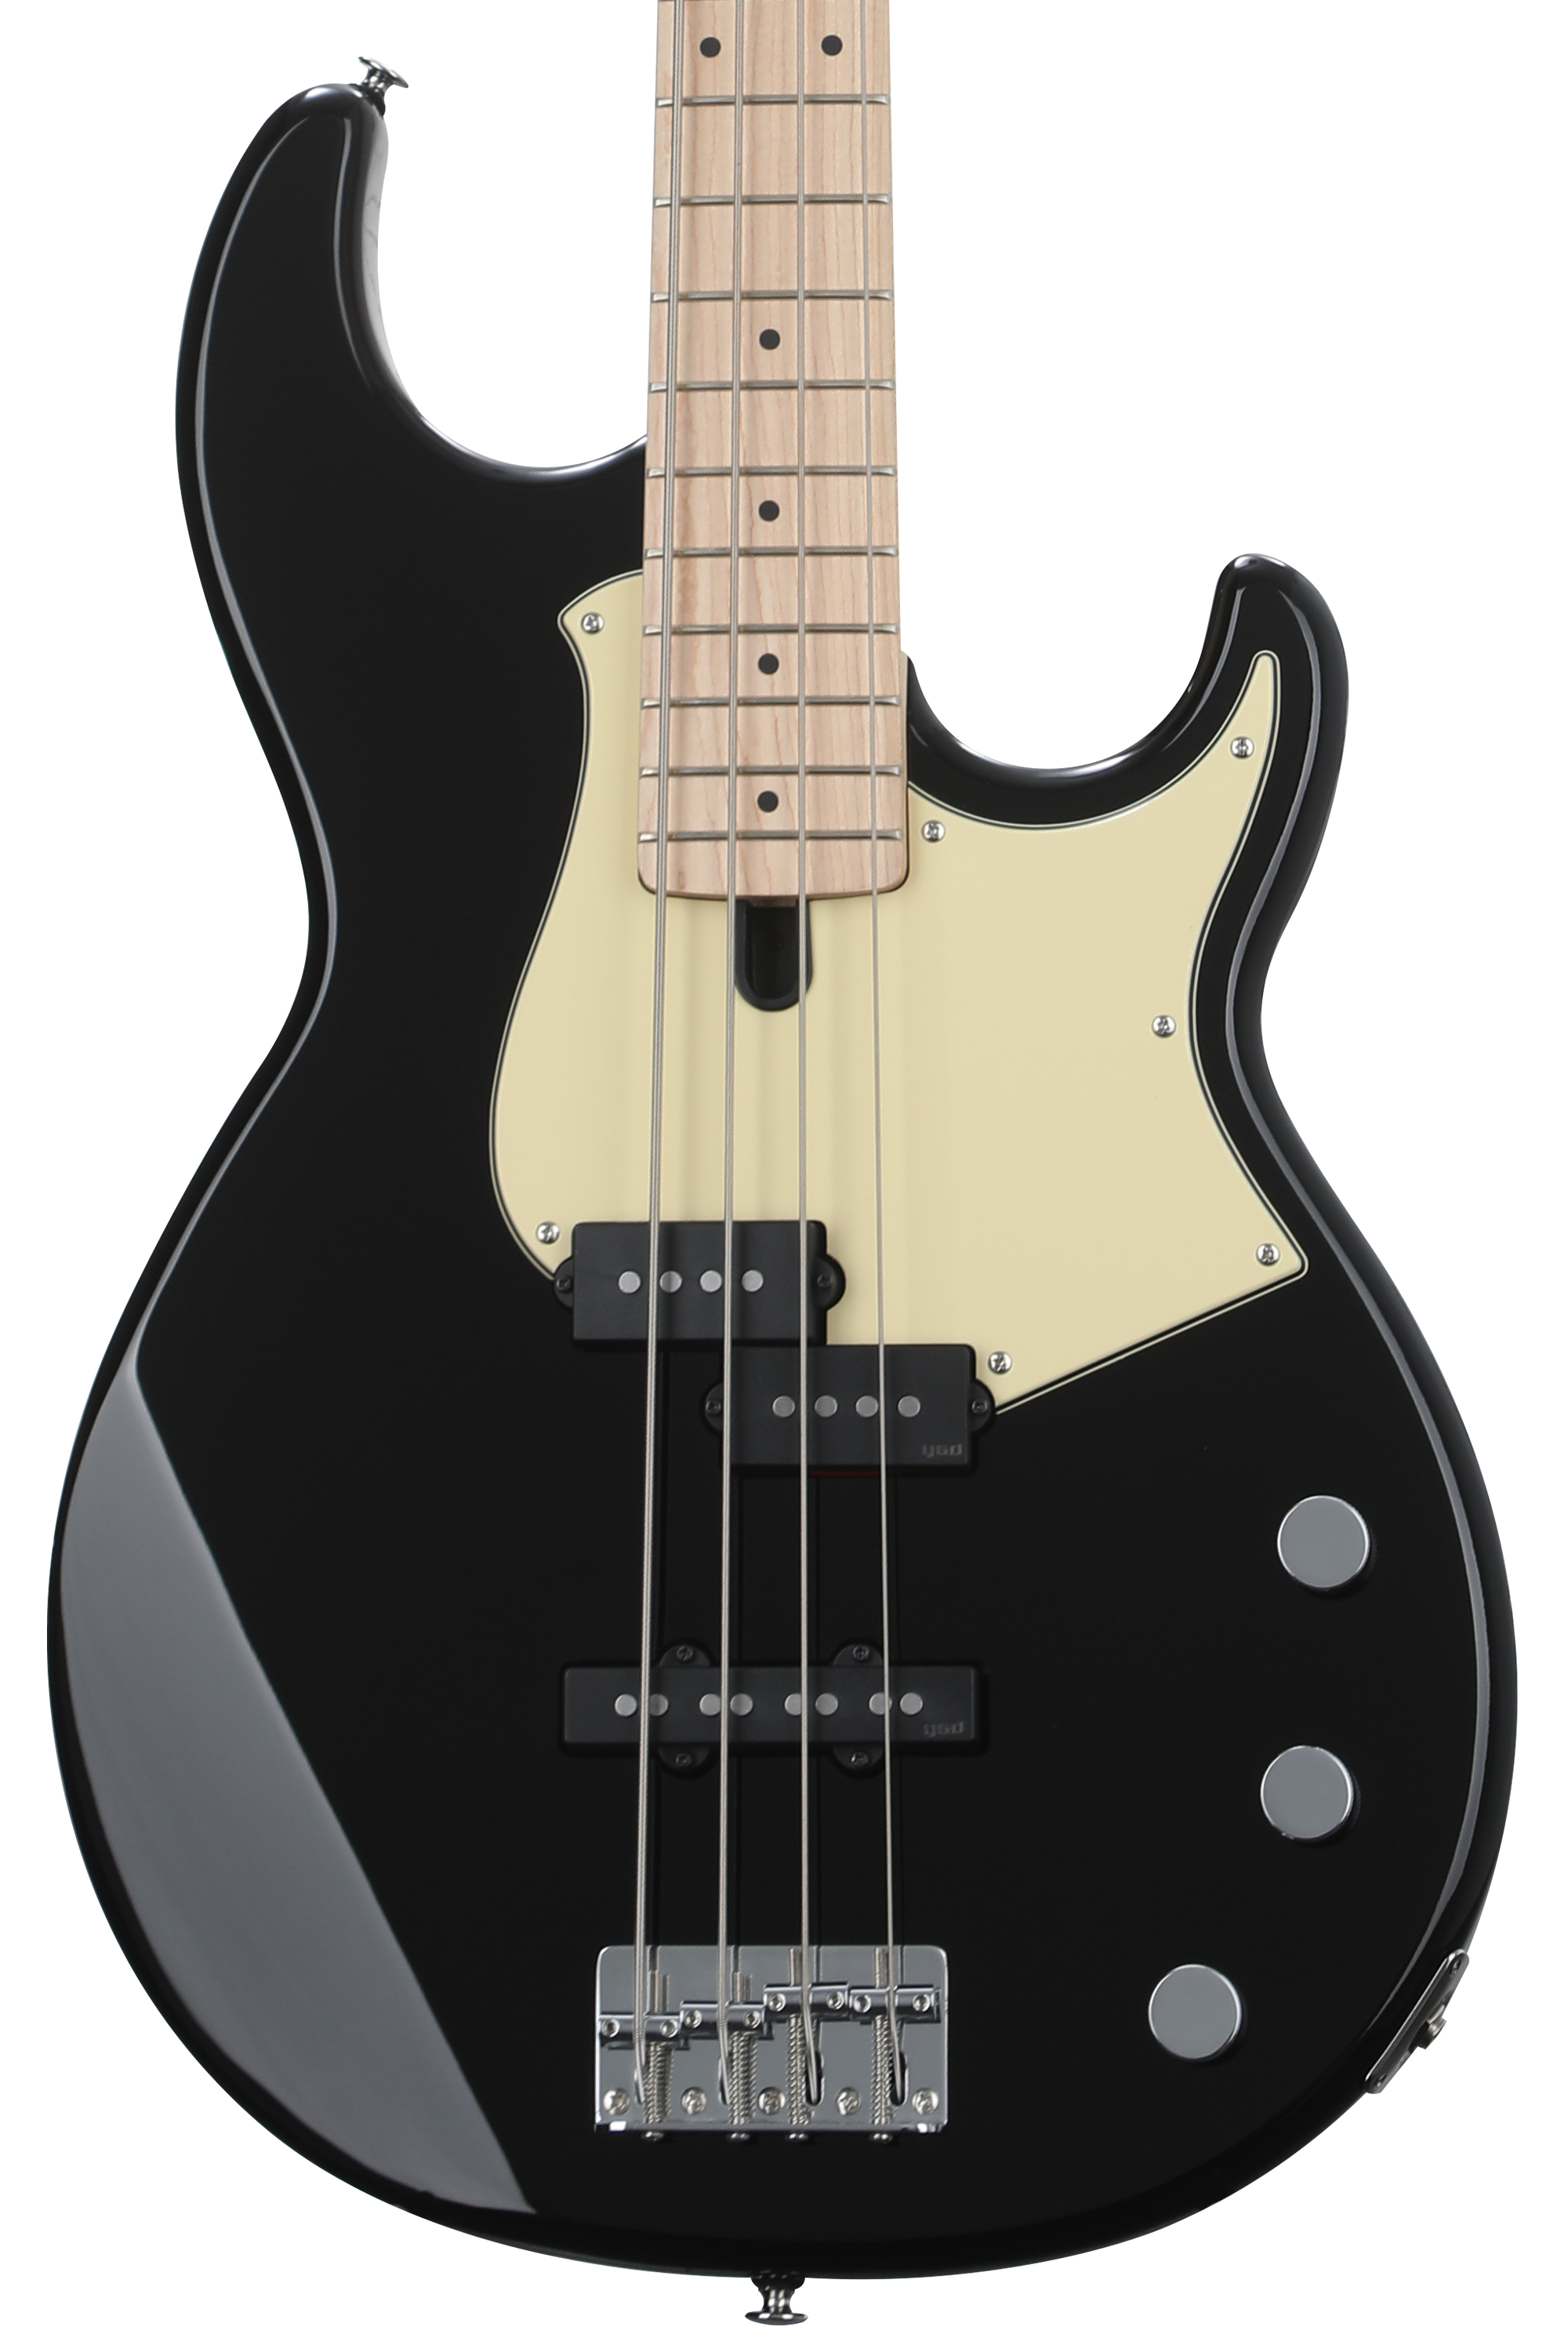 Yamaha BB434M Bass Guitar - Black